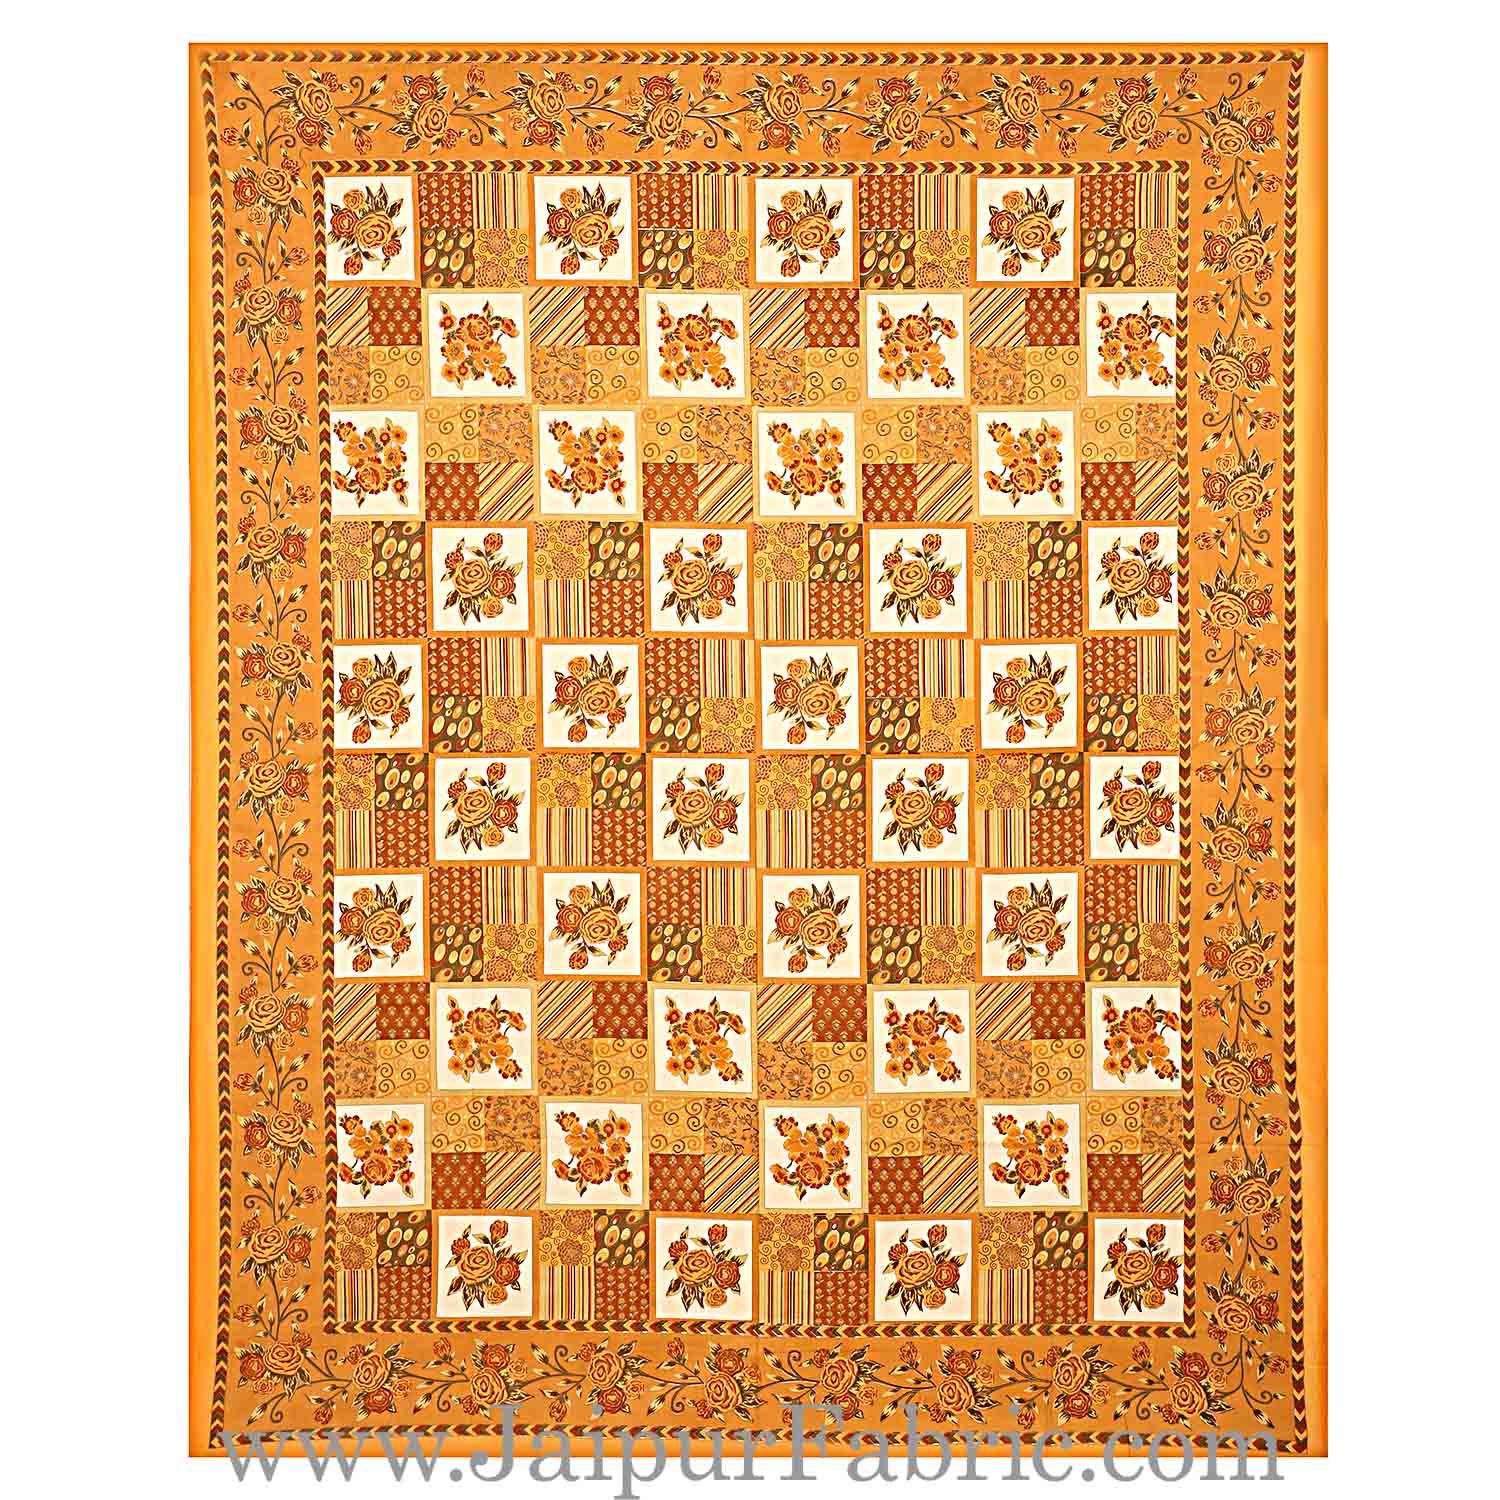 Mustard Color Floral Print Square Design Cotton Double Bed Sheet